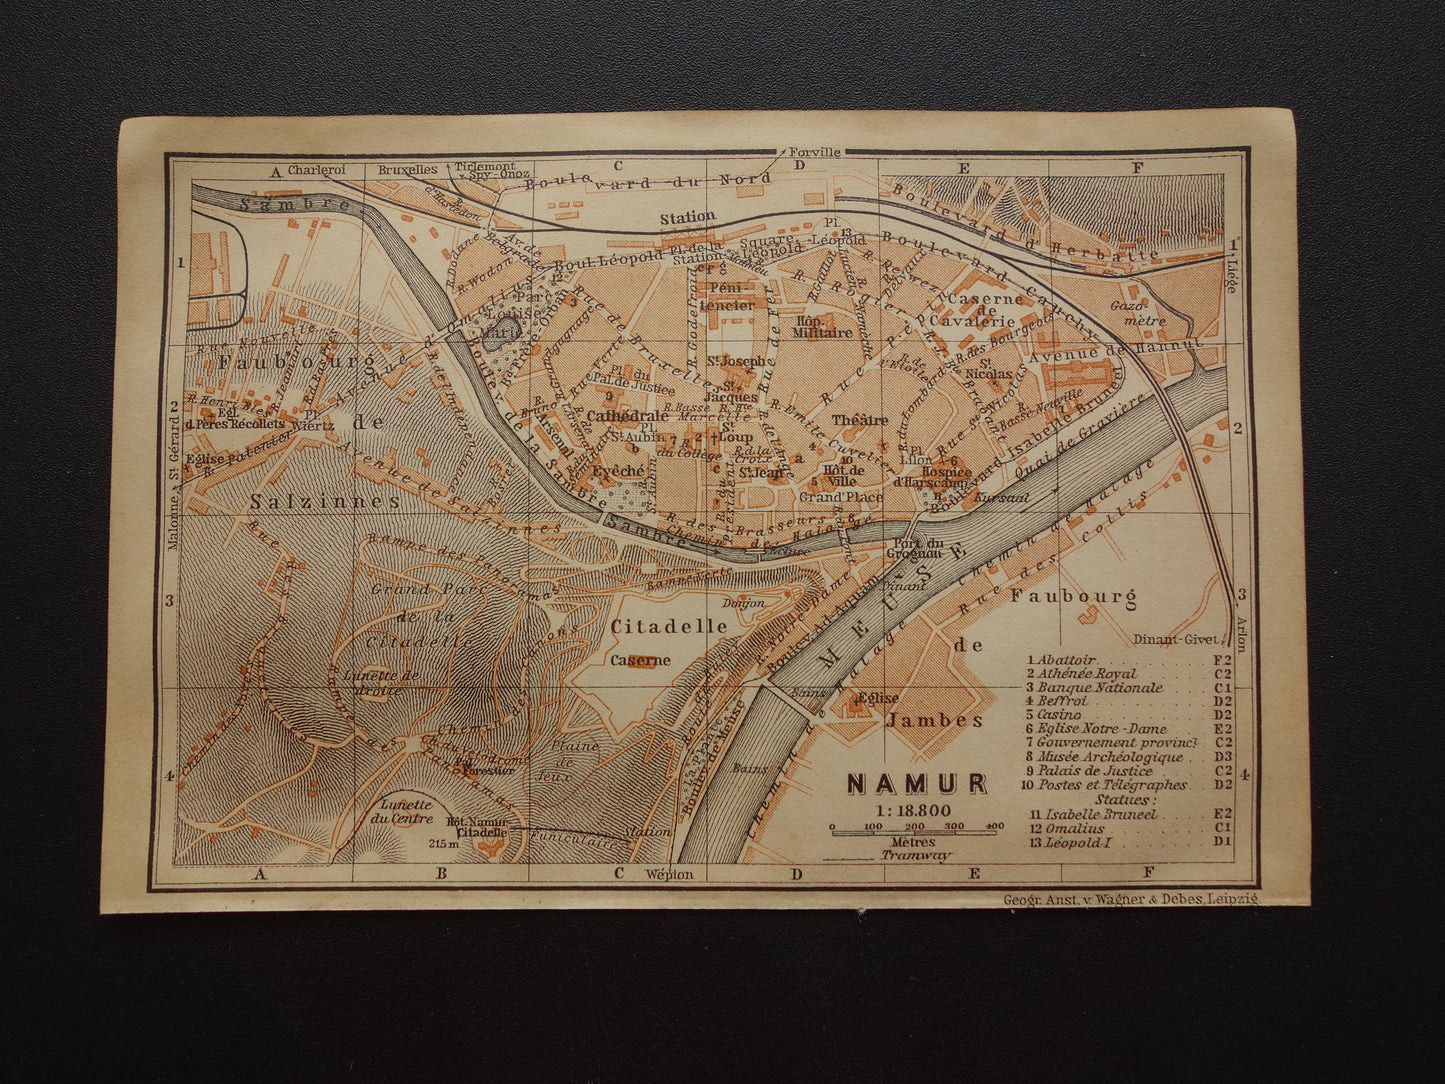 NAMEN oude kaart van Namur België uit 1904 kleine originele antieke plattegrond landkaart